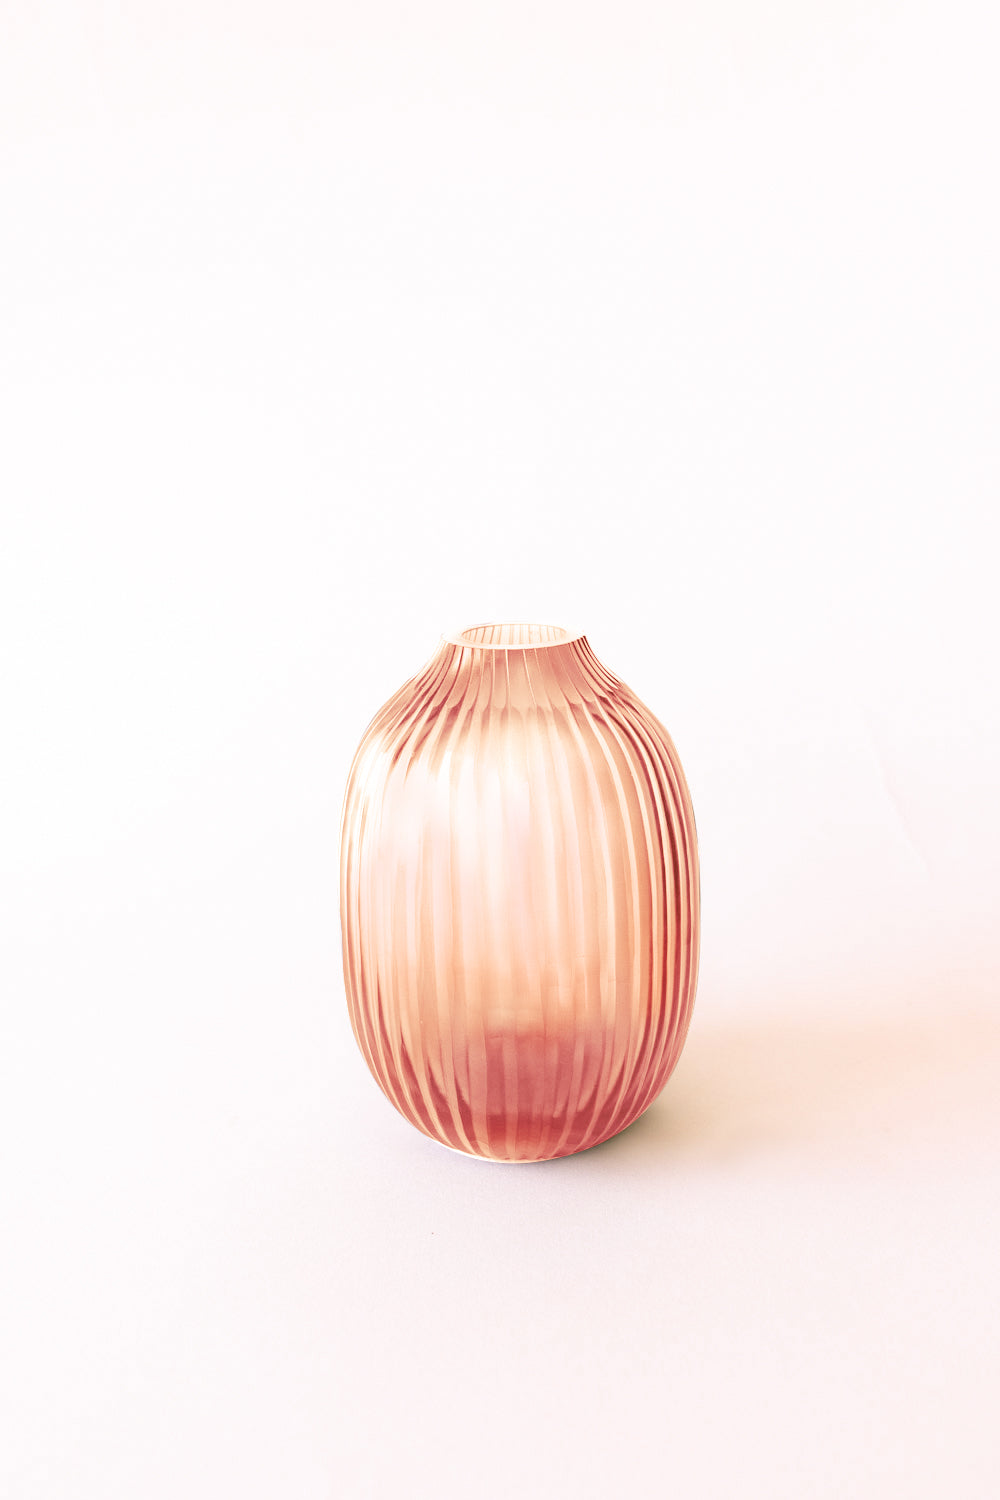 Brian Tunks Cut Glass Vase, Pod